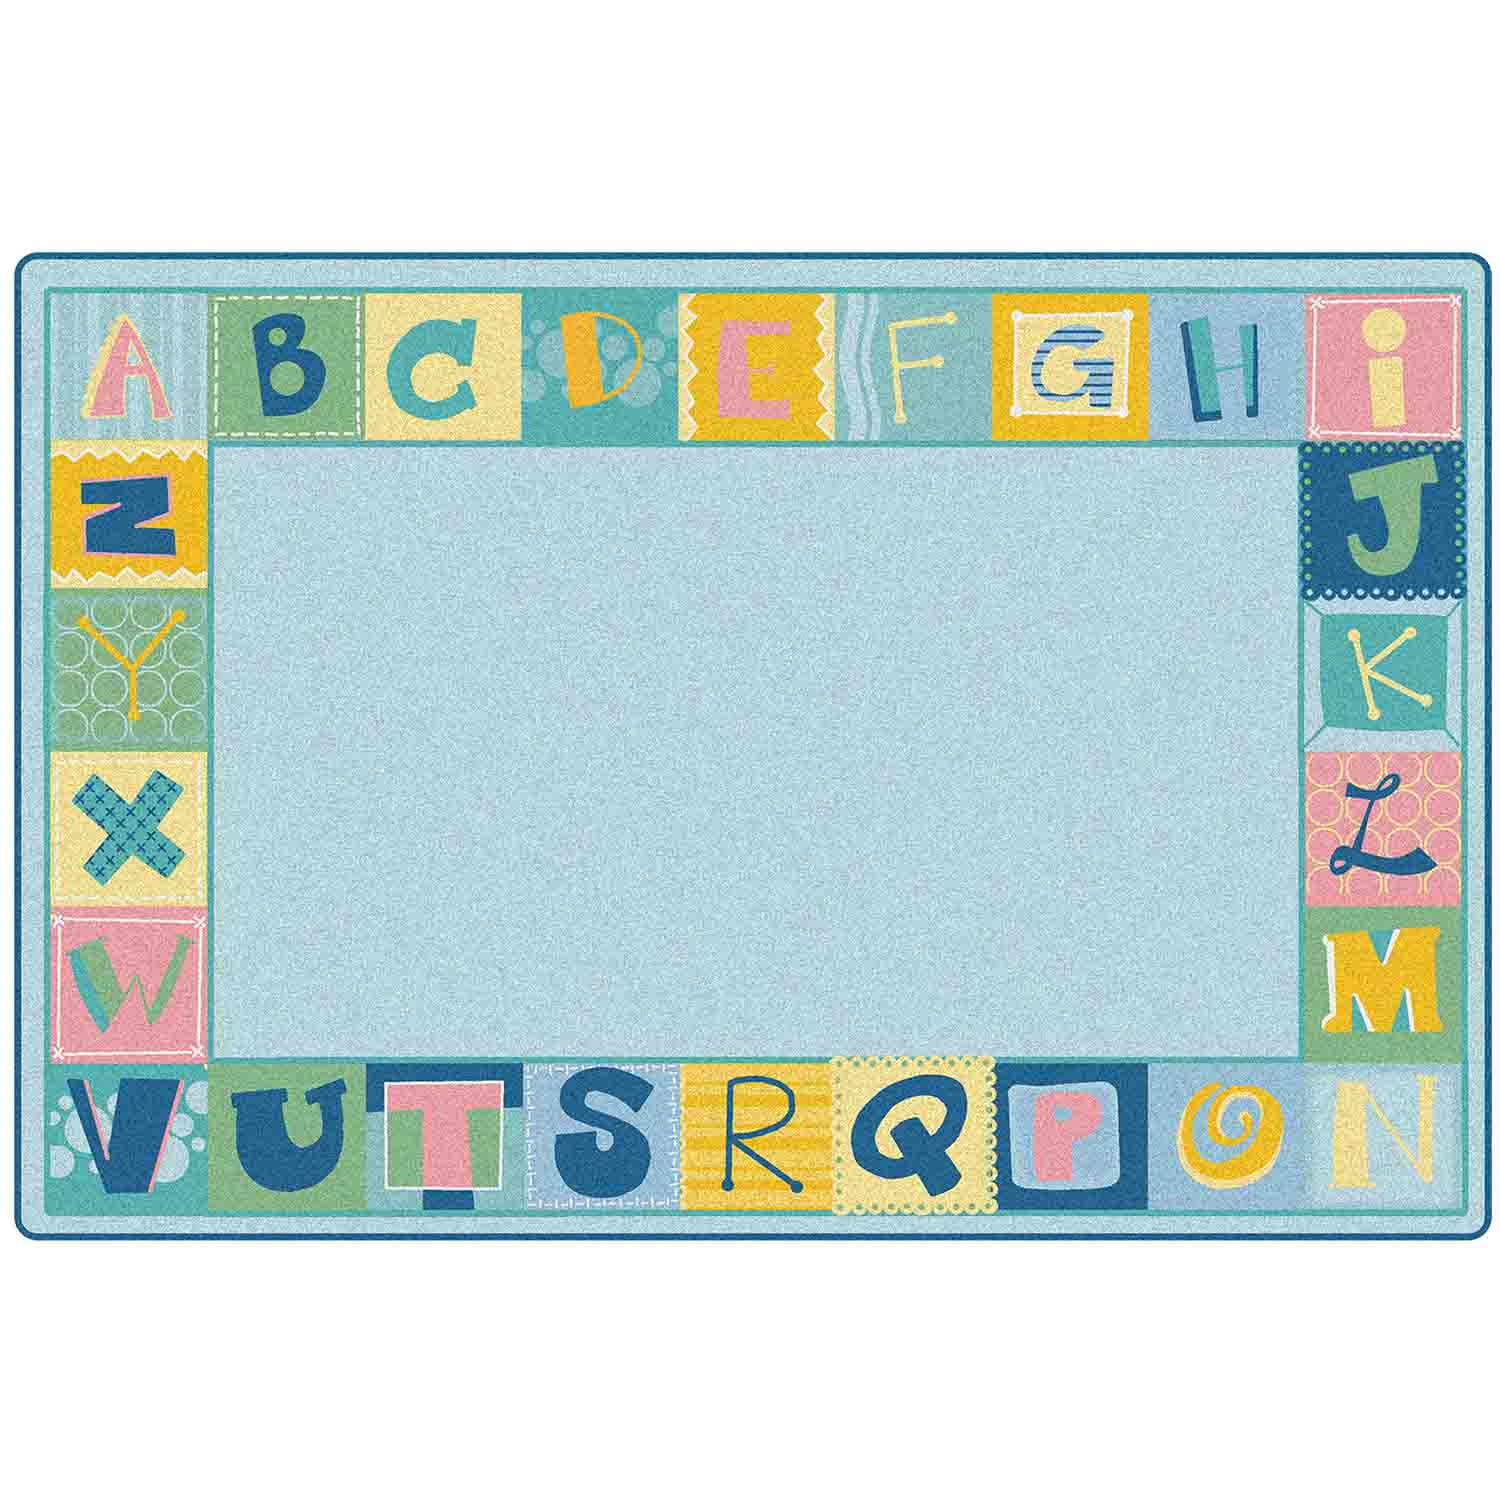 KIDSoft™ Alphabet Blocks Border Classroom Rug, Tranquil Colors, Rectangle 6' x 9'